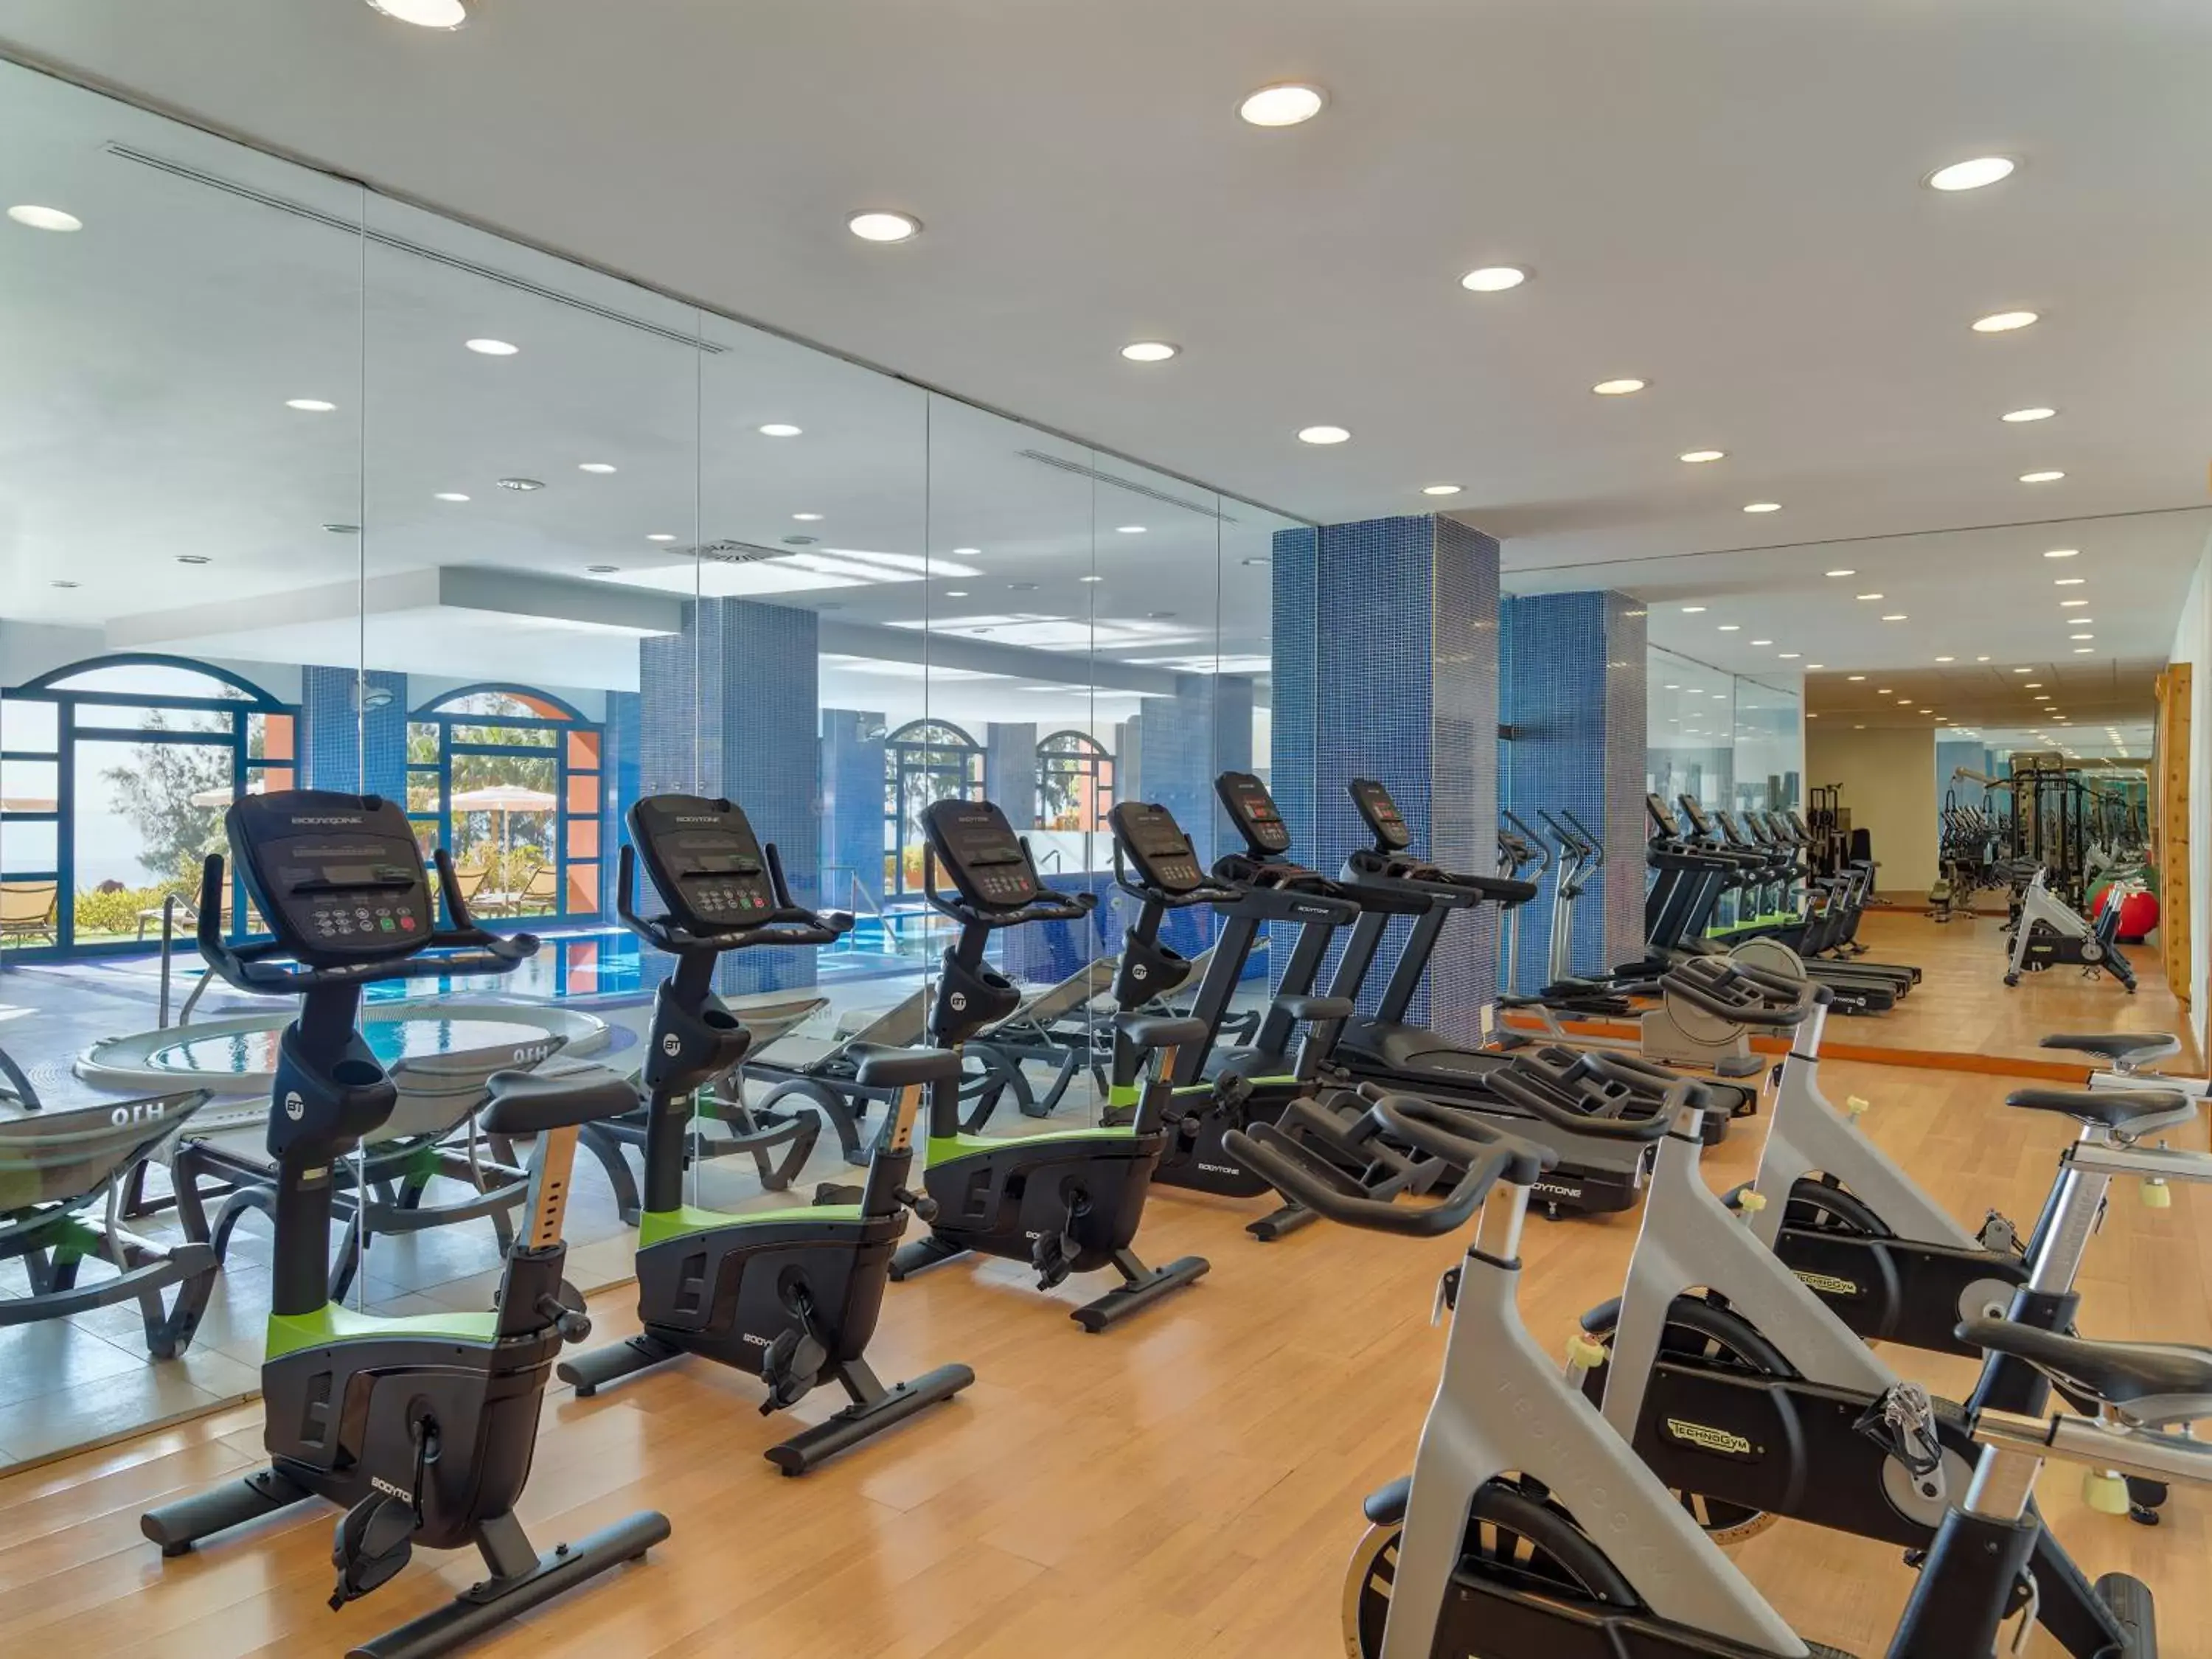 Fitness centre/facilities, Fitness Center/Facilities in H10 Tindaya